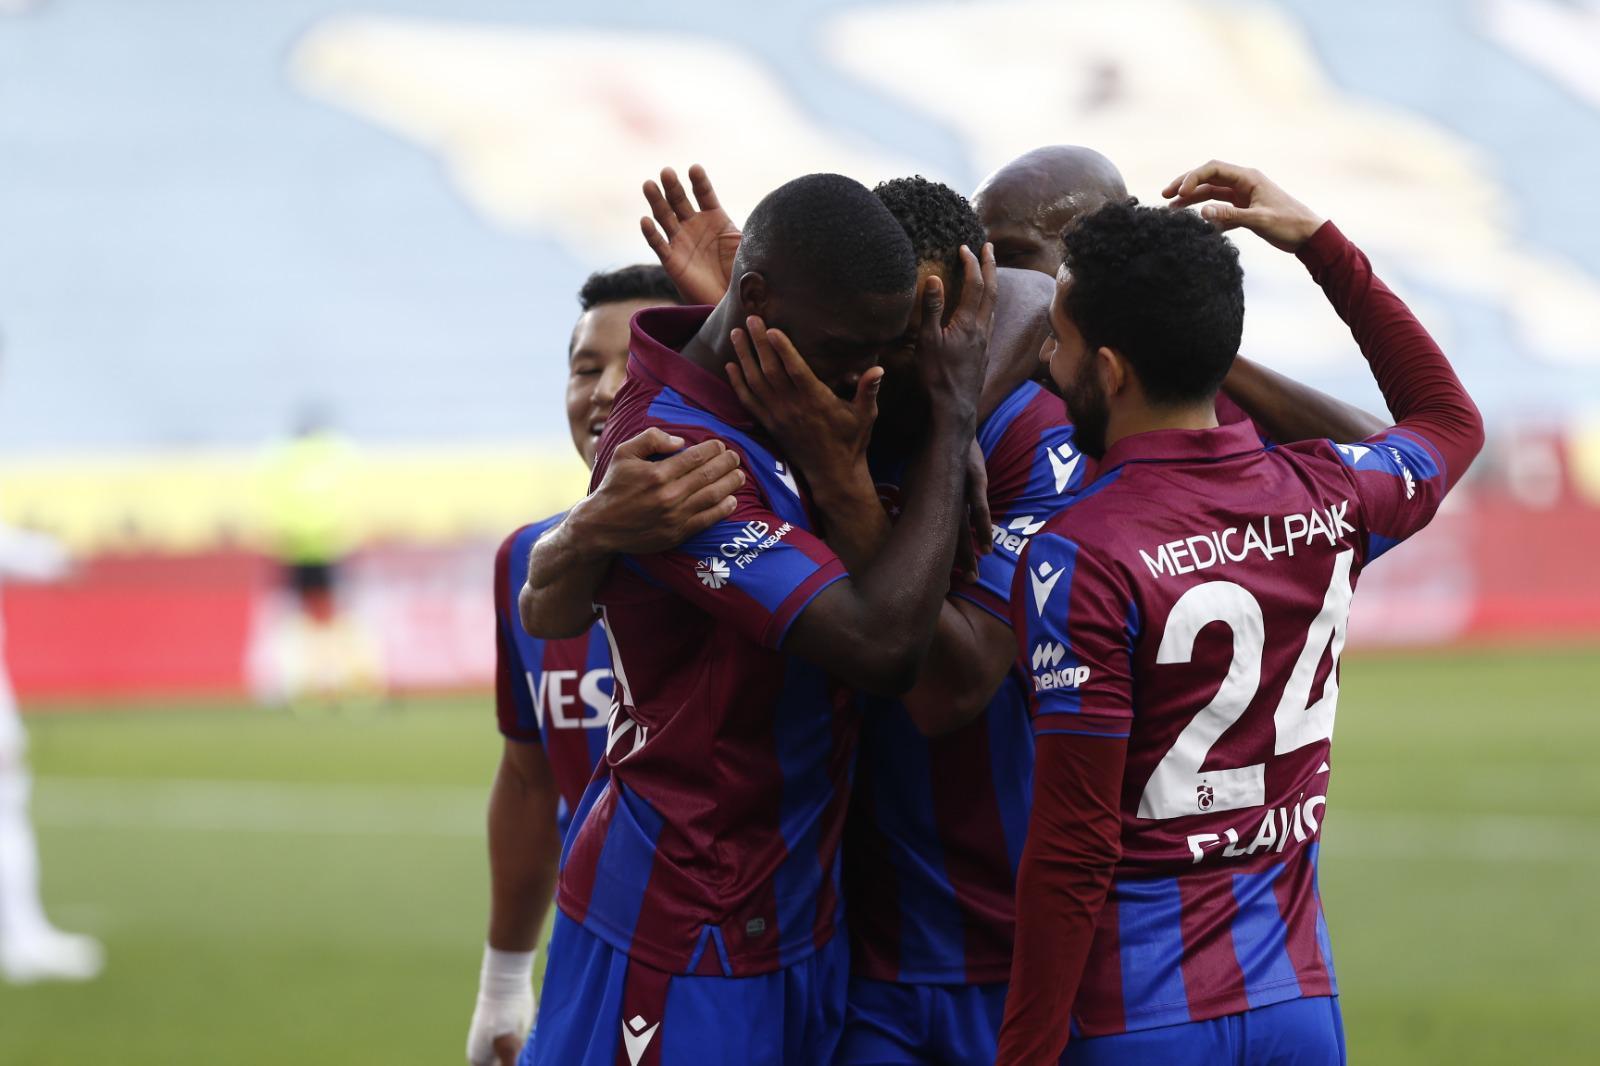 ÖZET | Trabzonspor - Fatih Karagümrük maç sonucu: 2-0